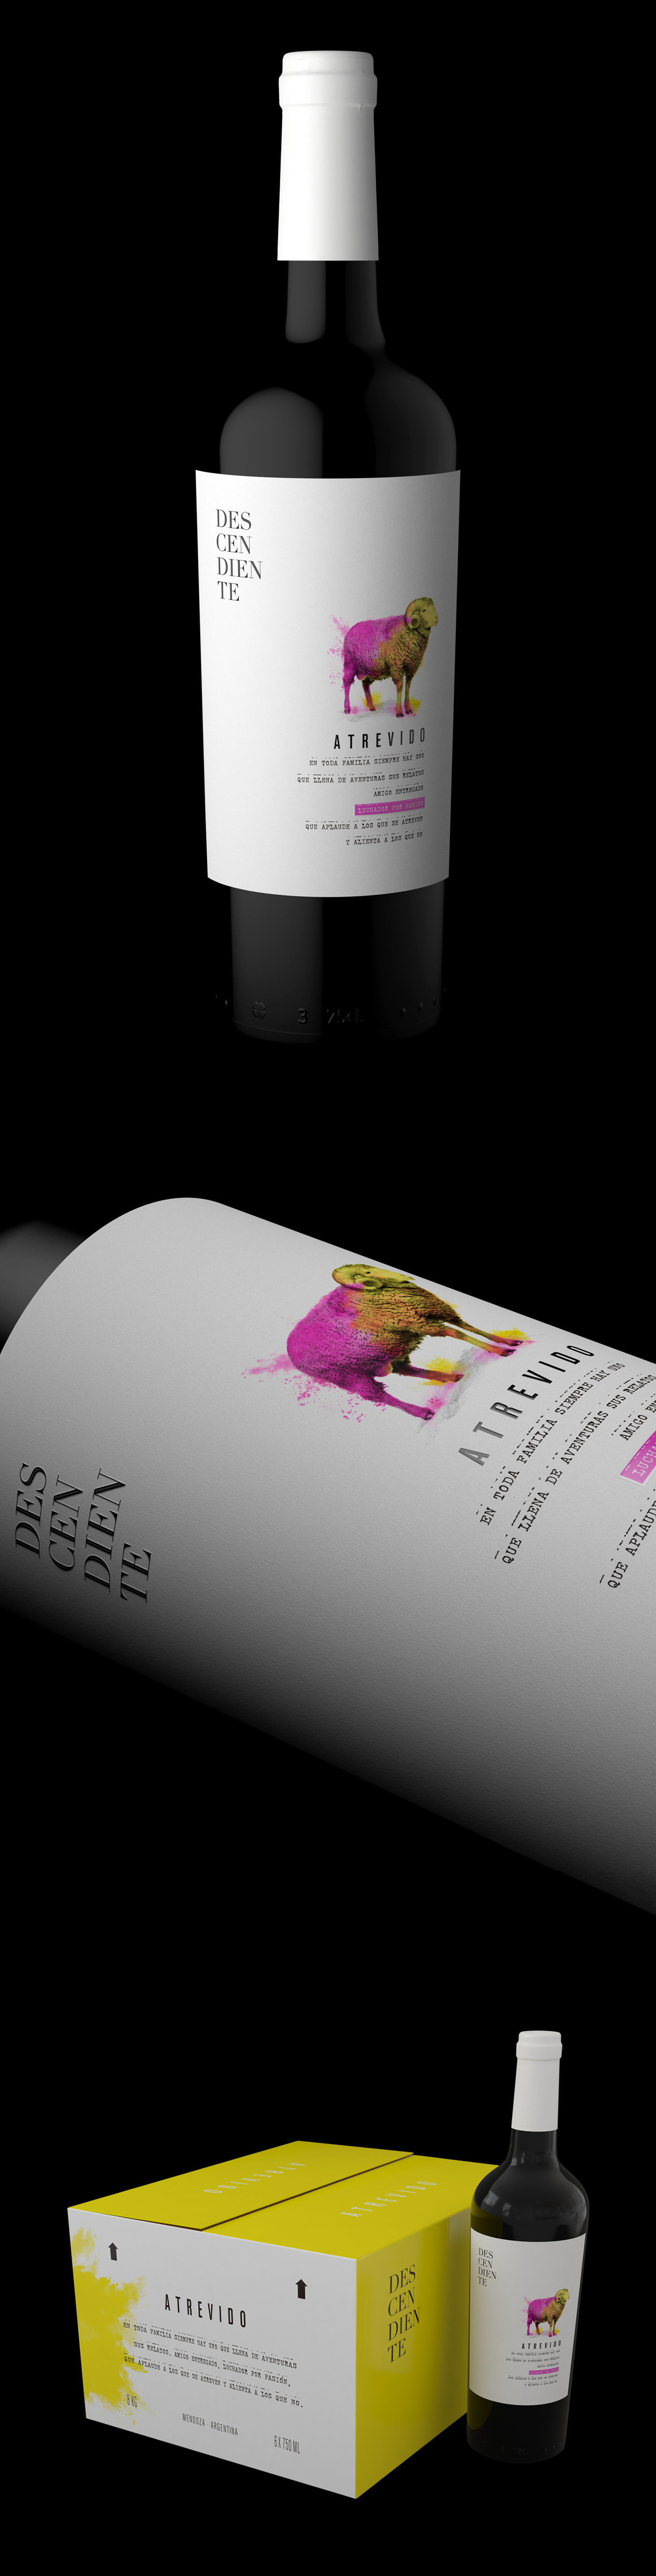 Packaging Minimalism labels minimalismo etiquetas vino wine sheep oveja tipografia